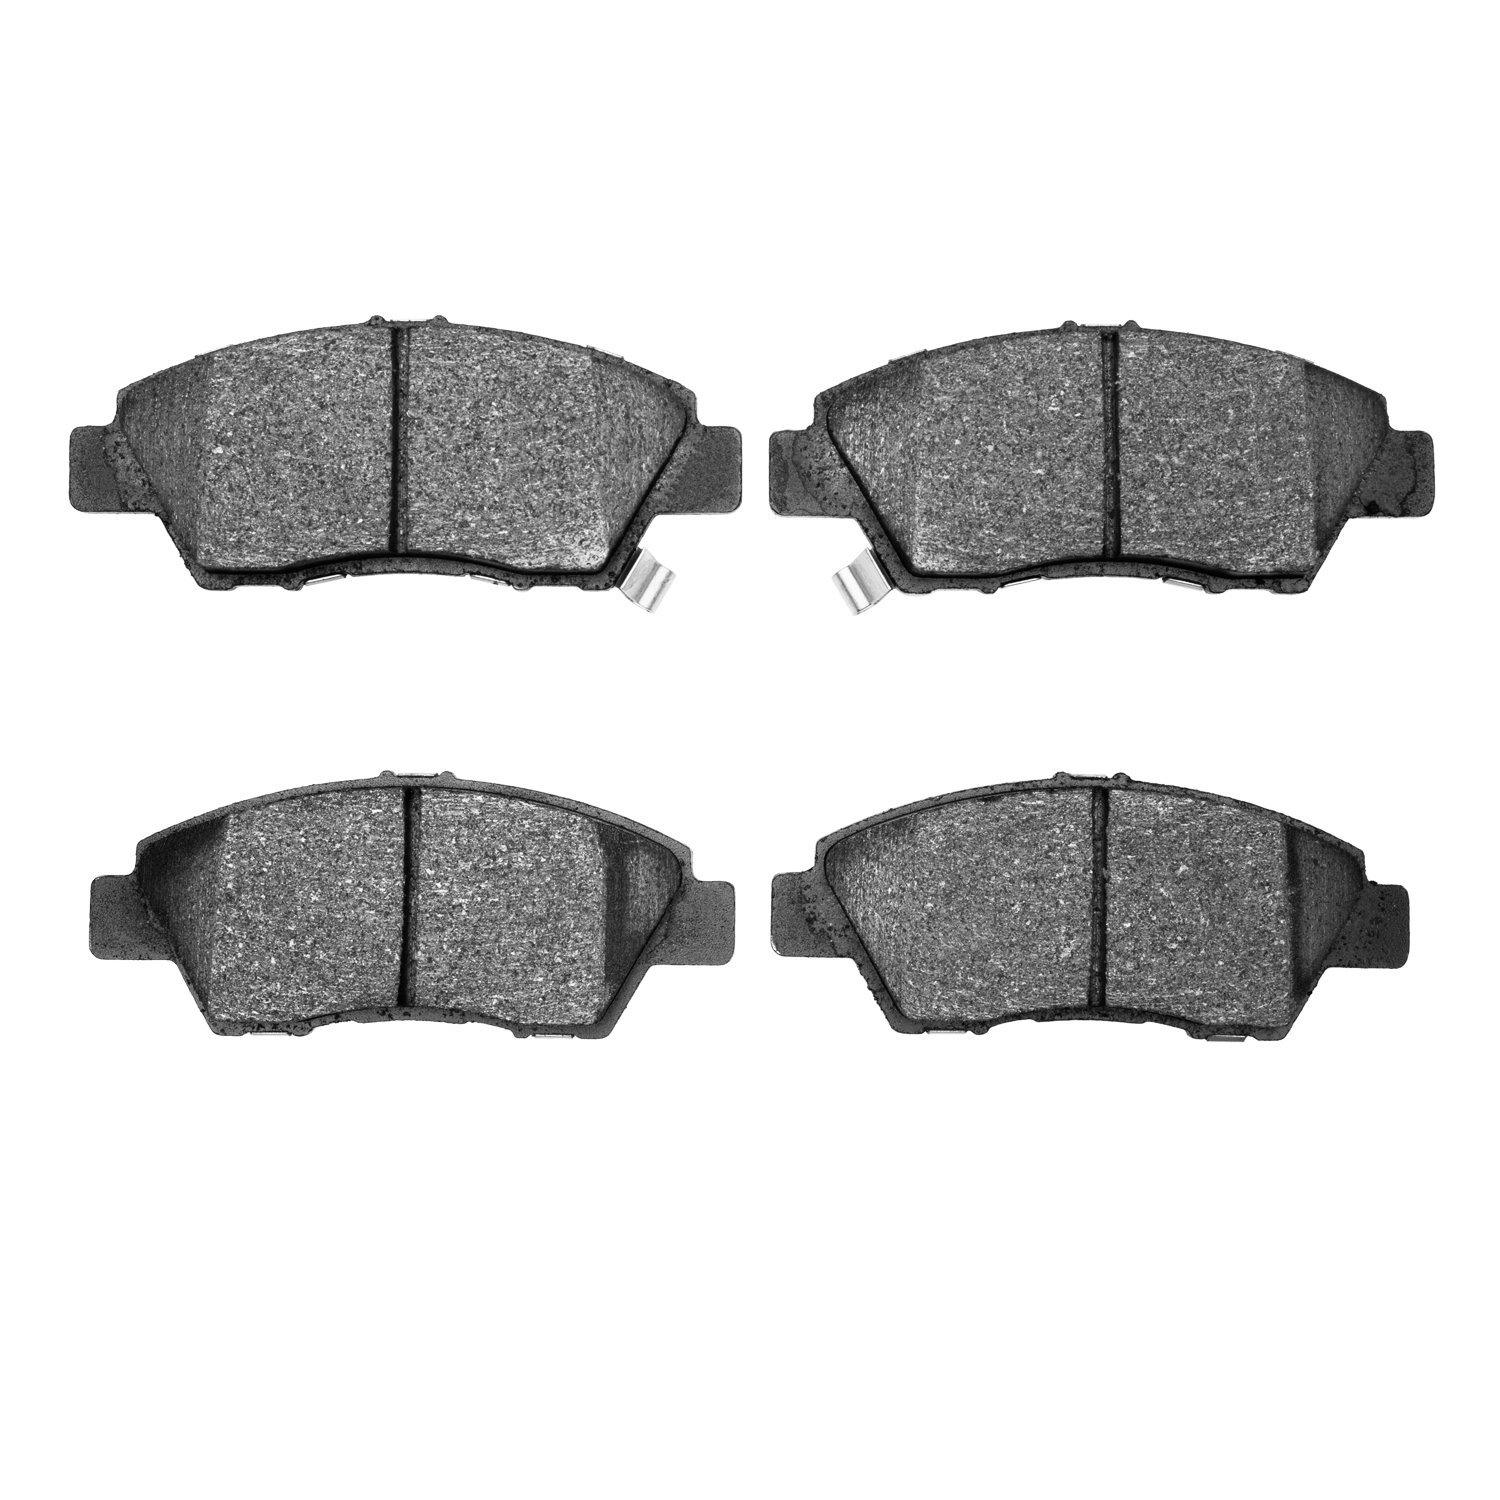 1000-1394-00 Track/Street Low-Metallic Brake Pads Kit, 2009-2020 Acura/Honda, Position: Front